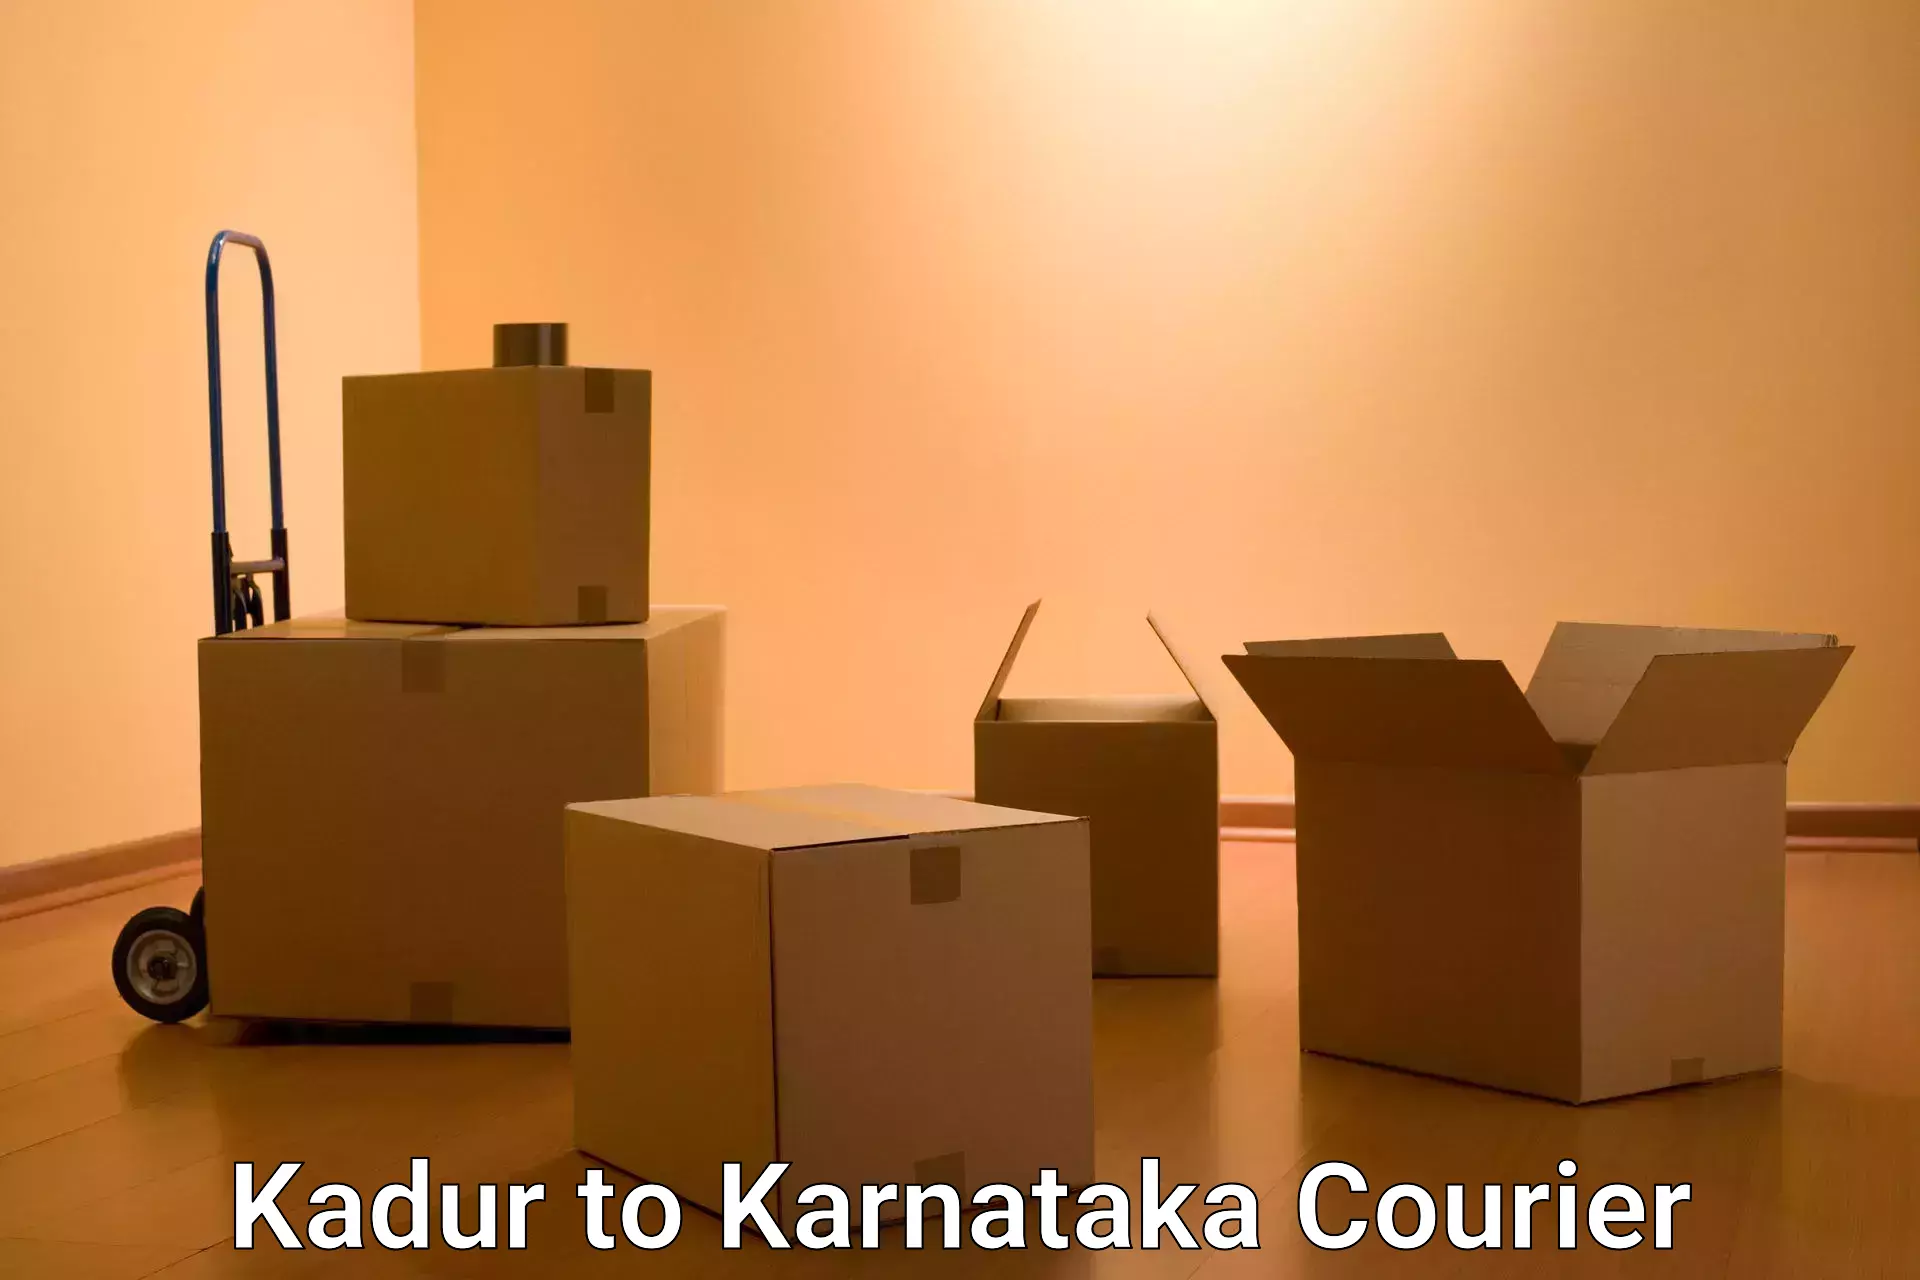 Courier service comparison in Kadur to Karnataka